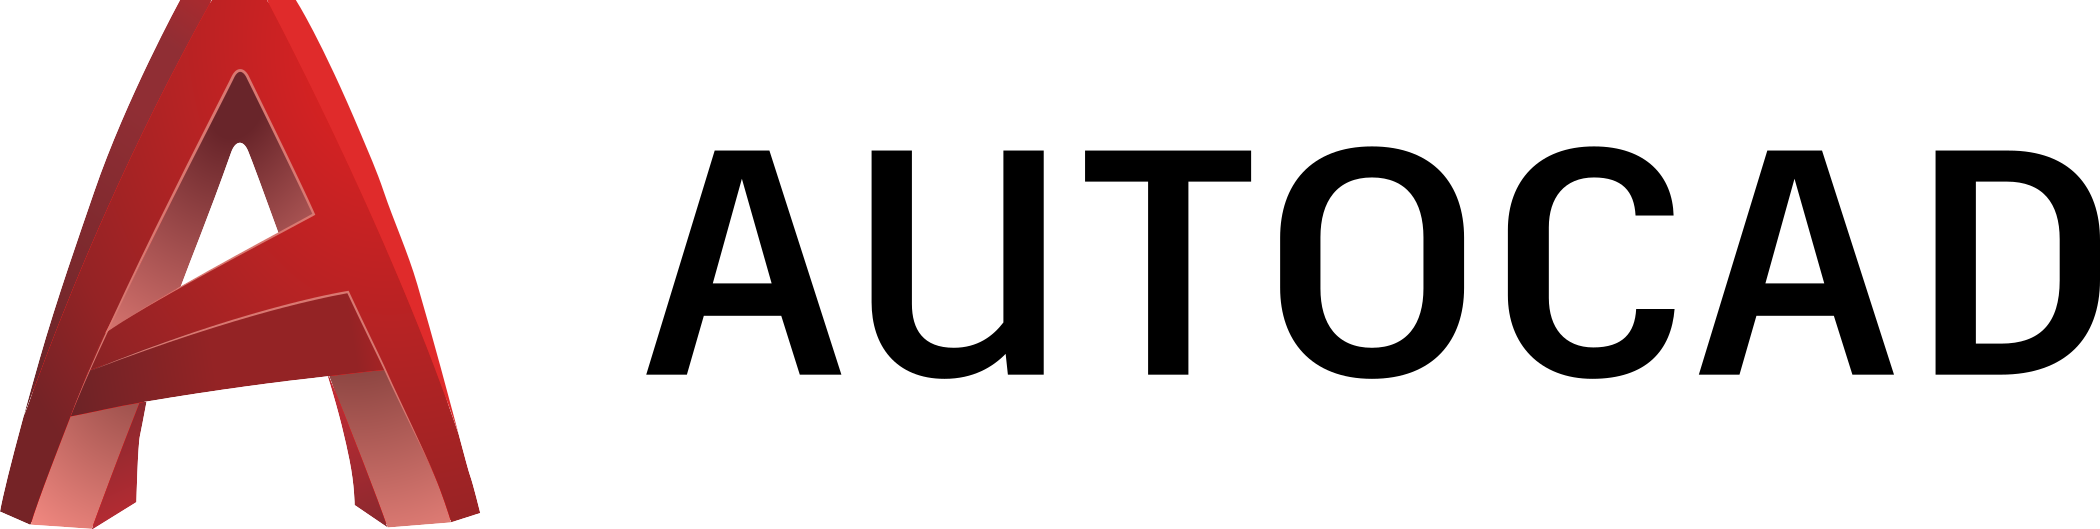 AutoCAD Logo - PNG e Vetor - Download de Logo